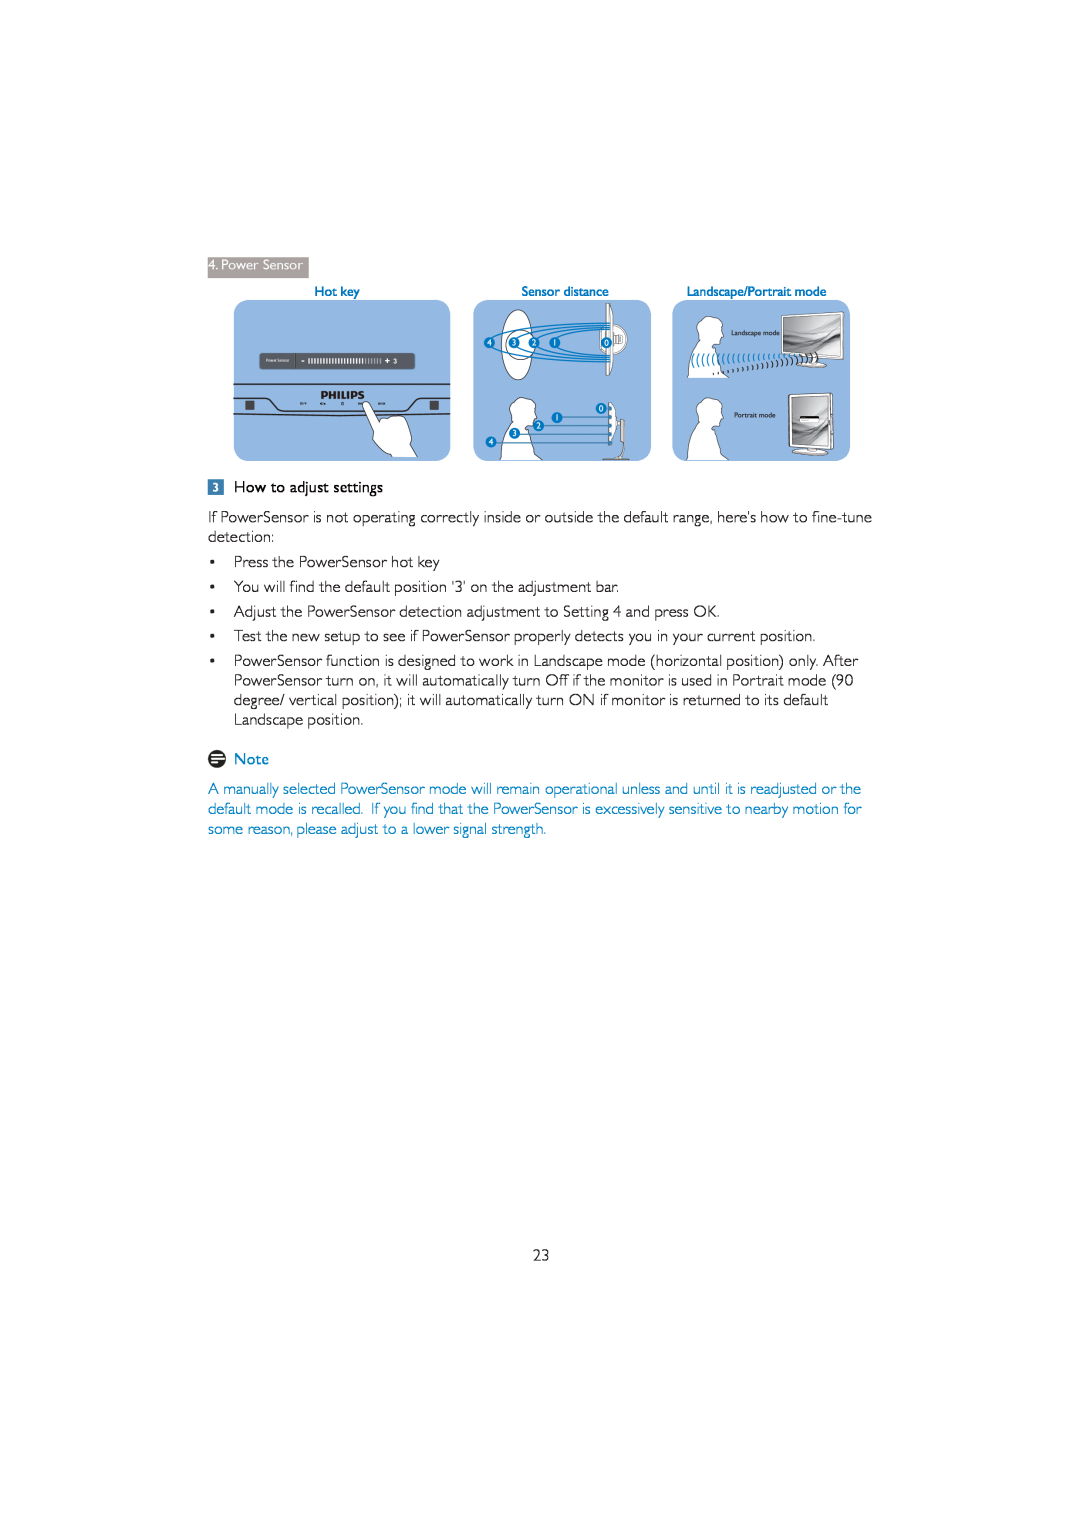 Philips 273P3Q user manual How to adjust settings, Press the PowerSensor hot key 